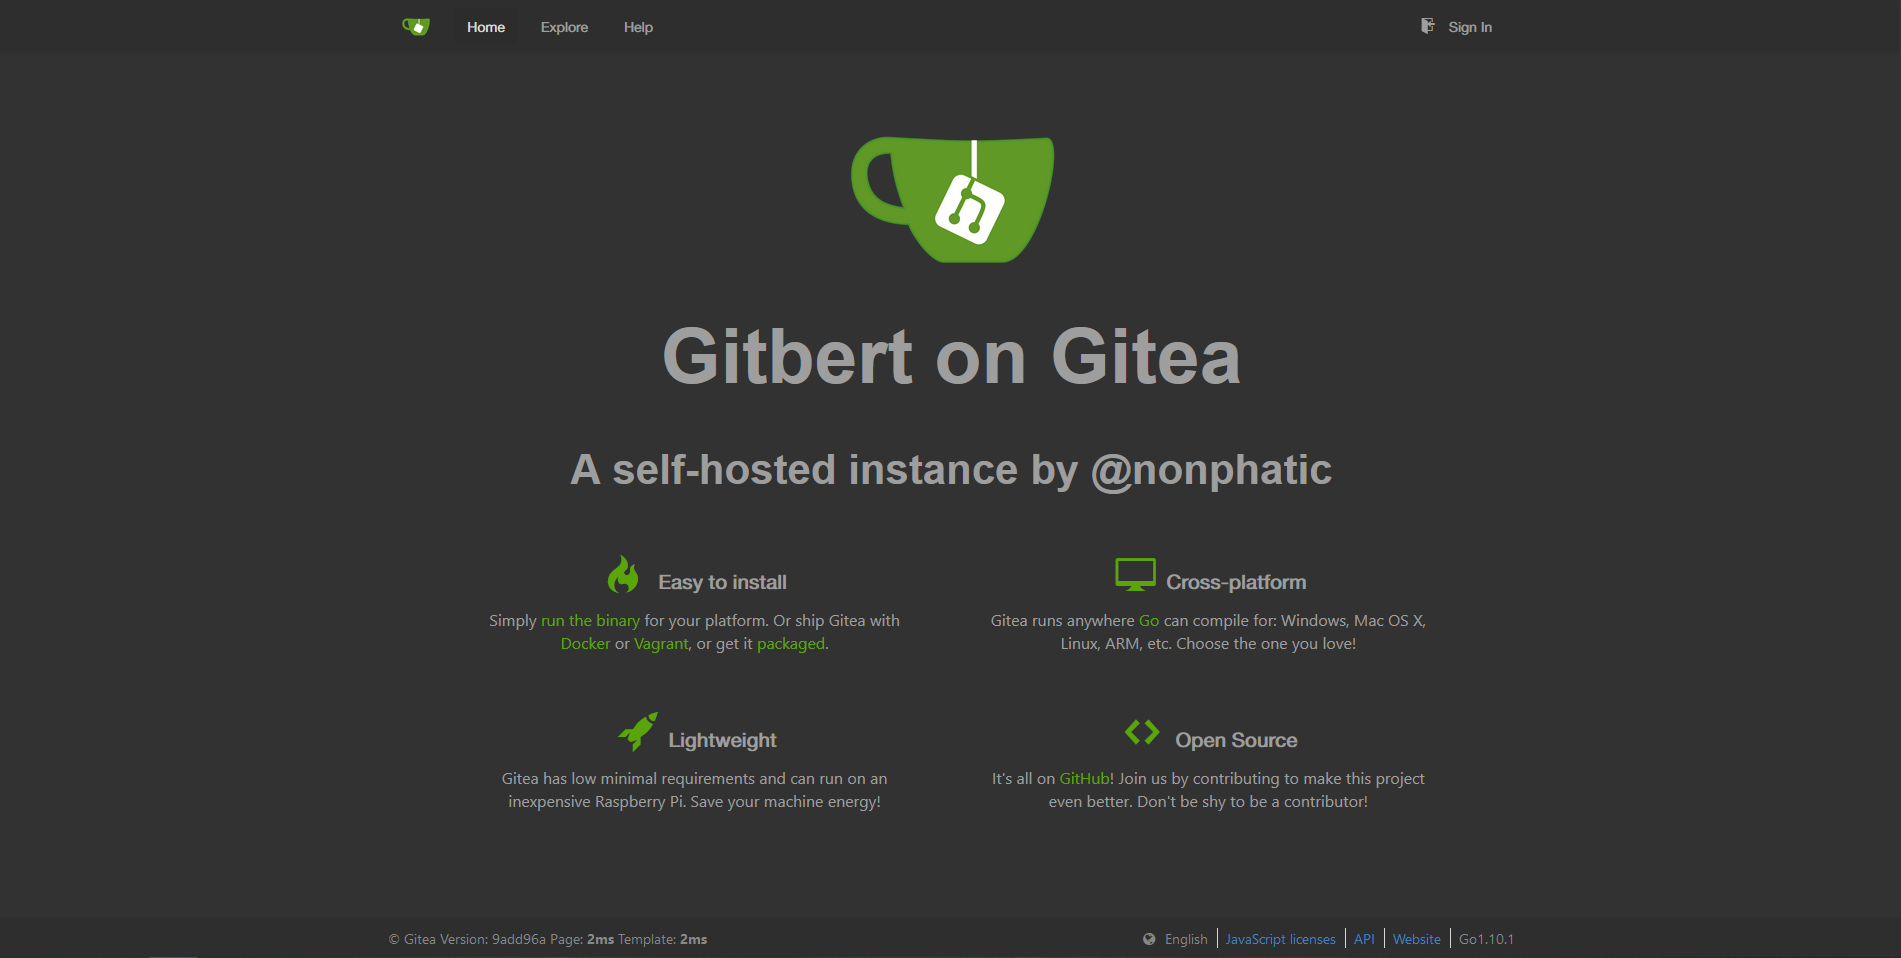 Gitea home page with title: “Gitbert on Gitea”